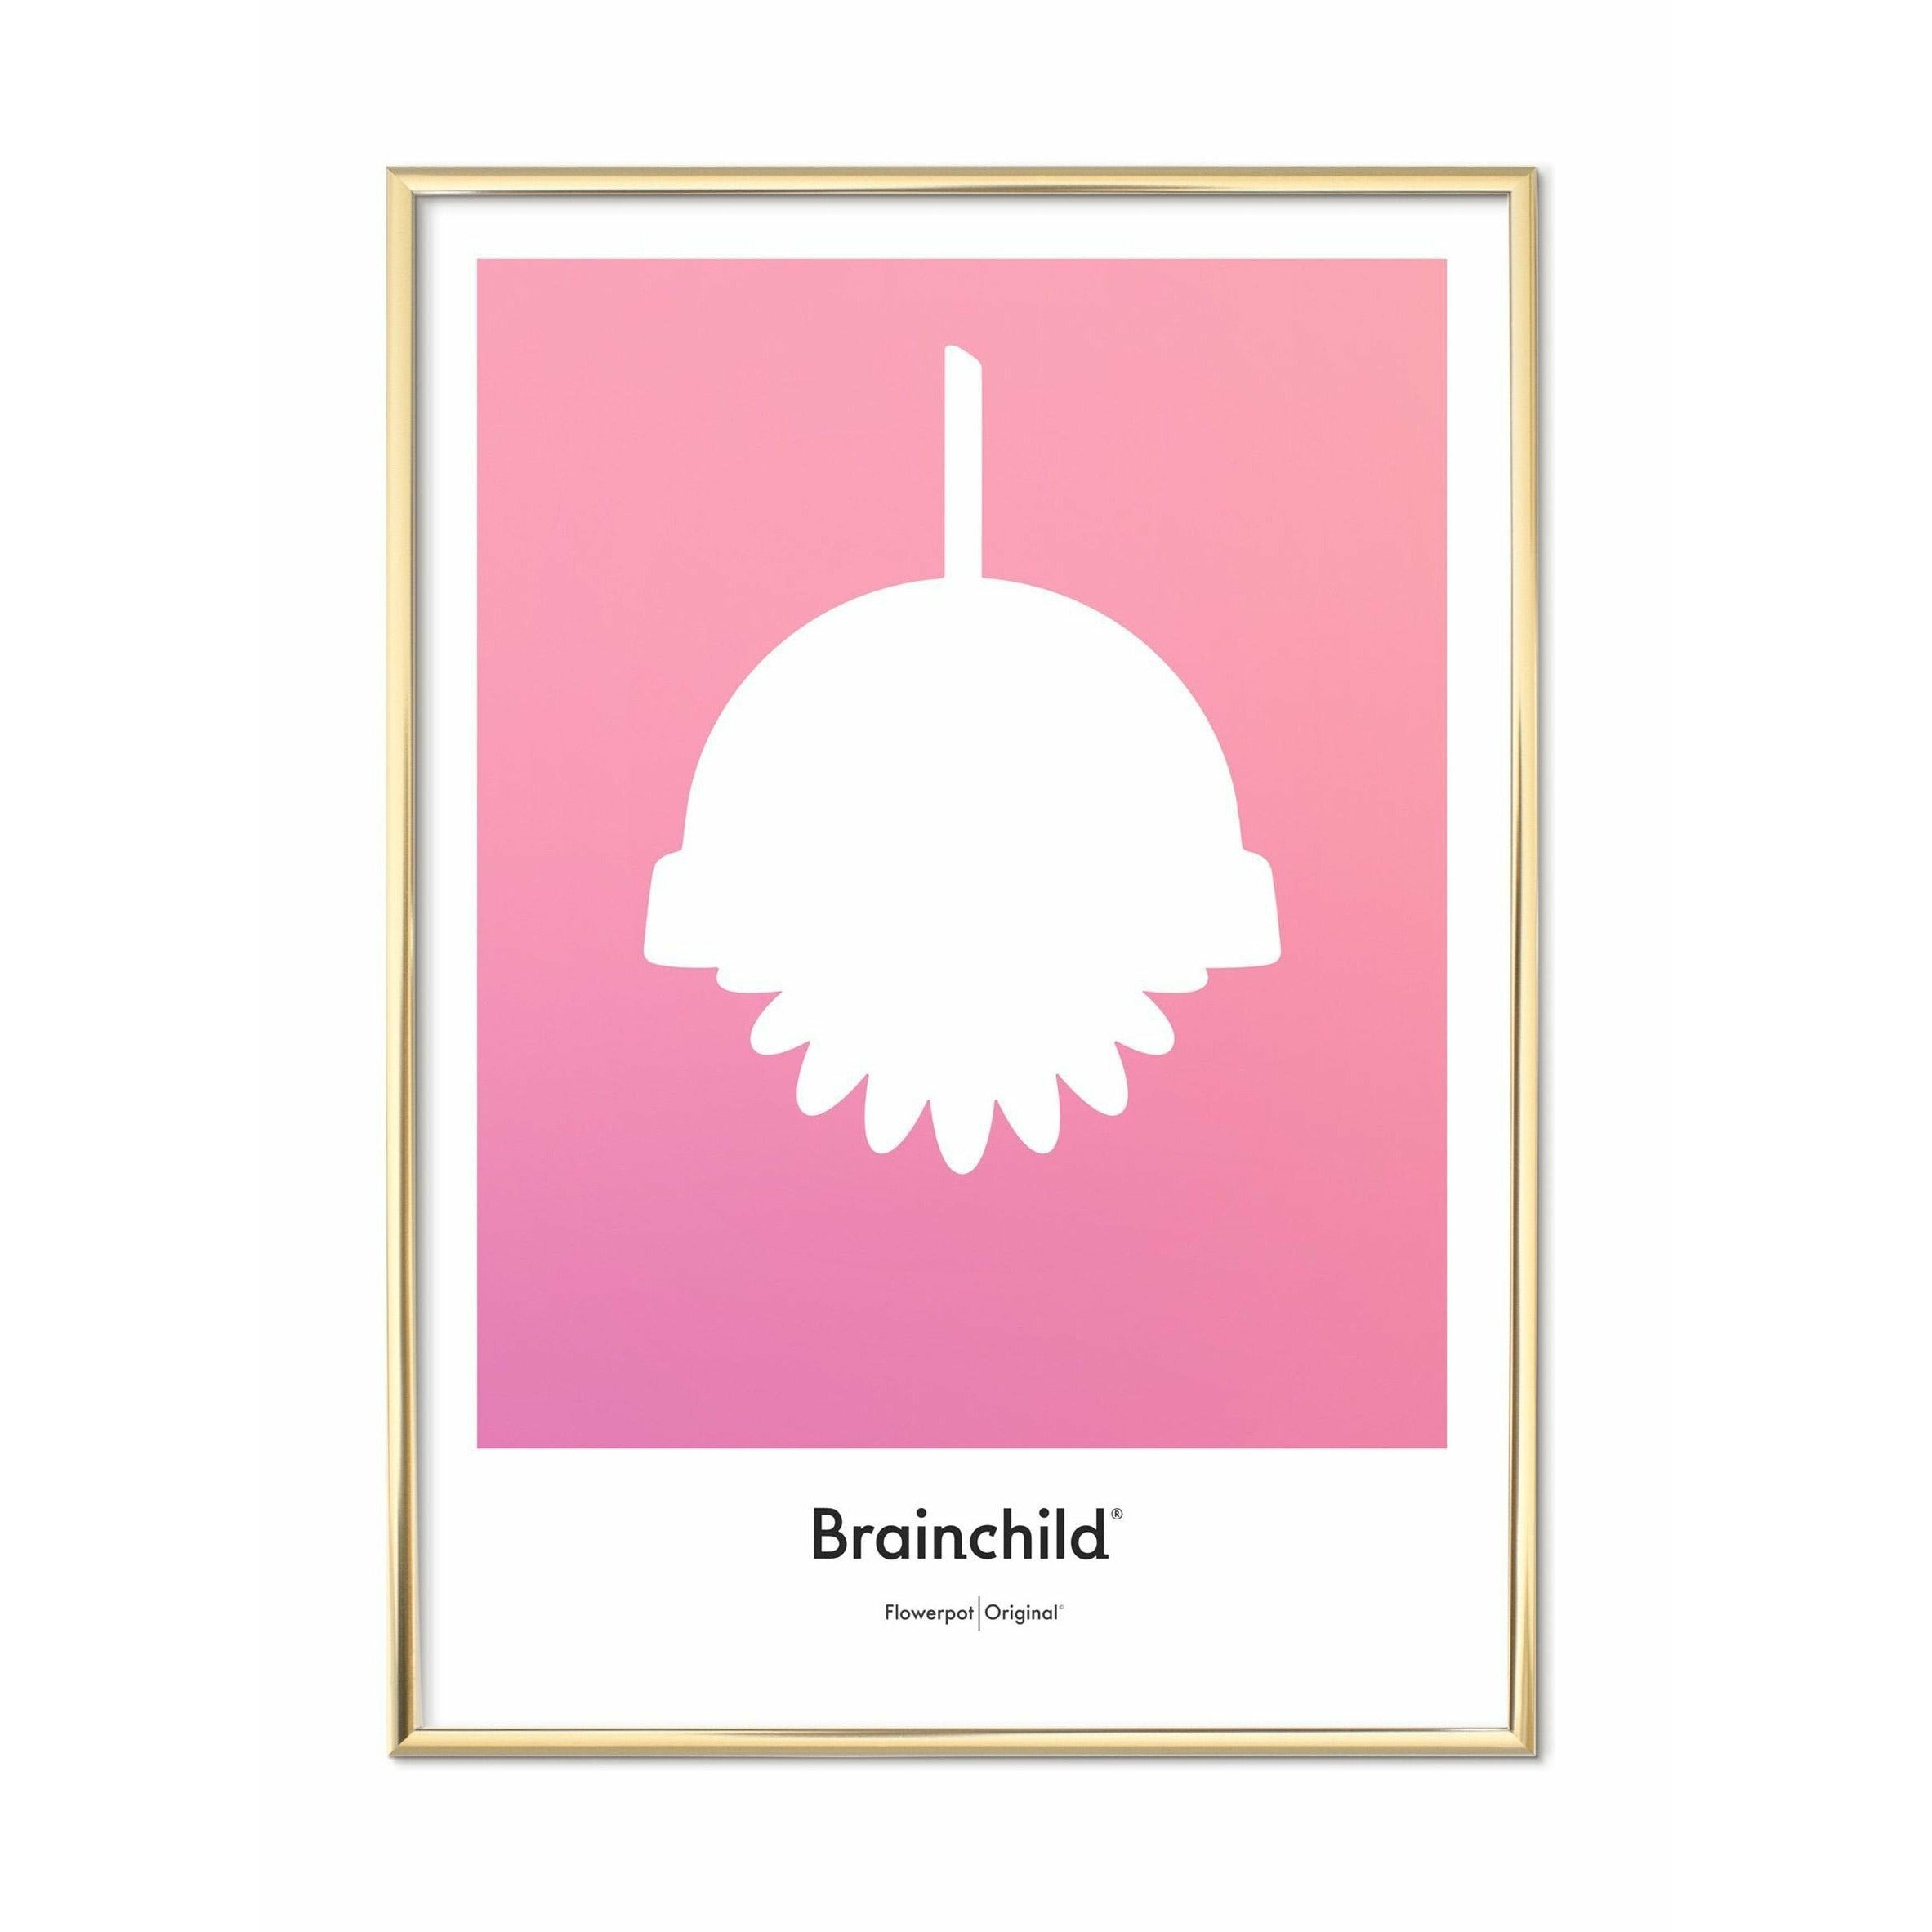 Brainchild Blumentopf Design Icon Poster, Messing farbigen Rahmen 30 X40 Cm, Rosa